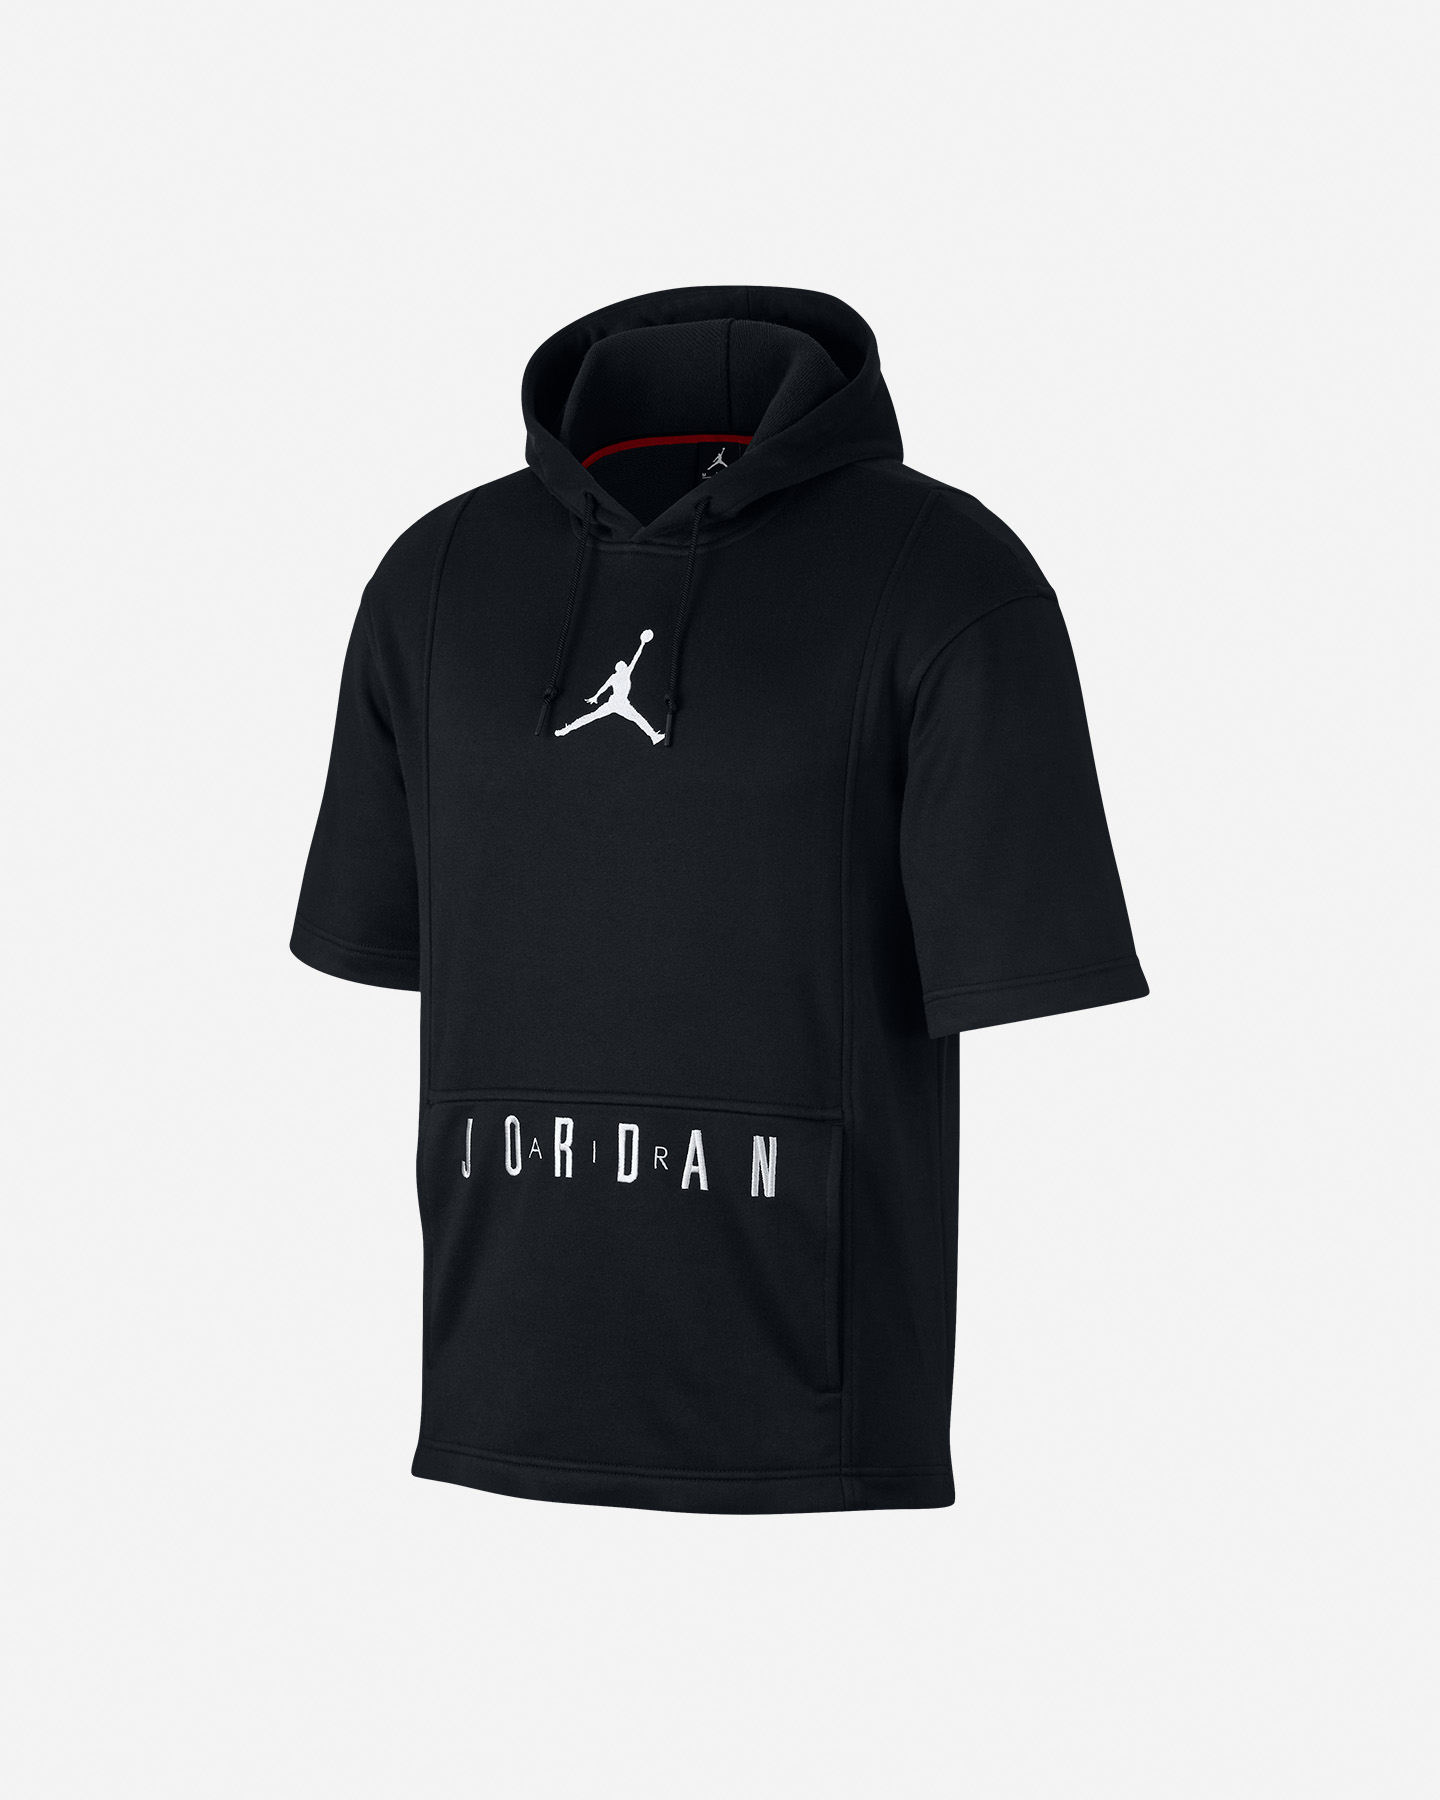 Abbigliamento Basket Nike Jordan Bbal Hoodie M 931838-010 